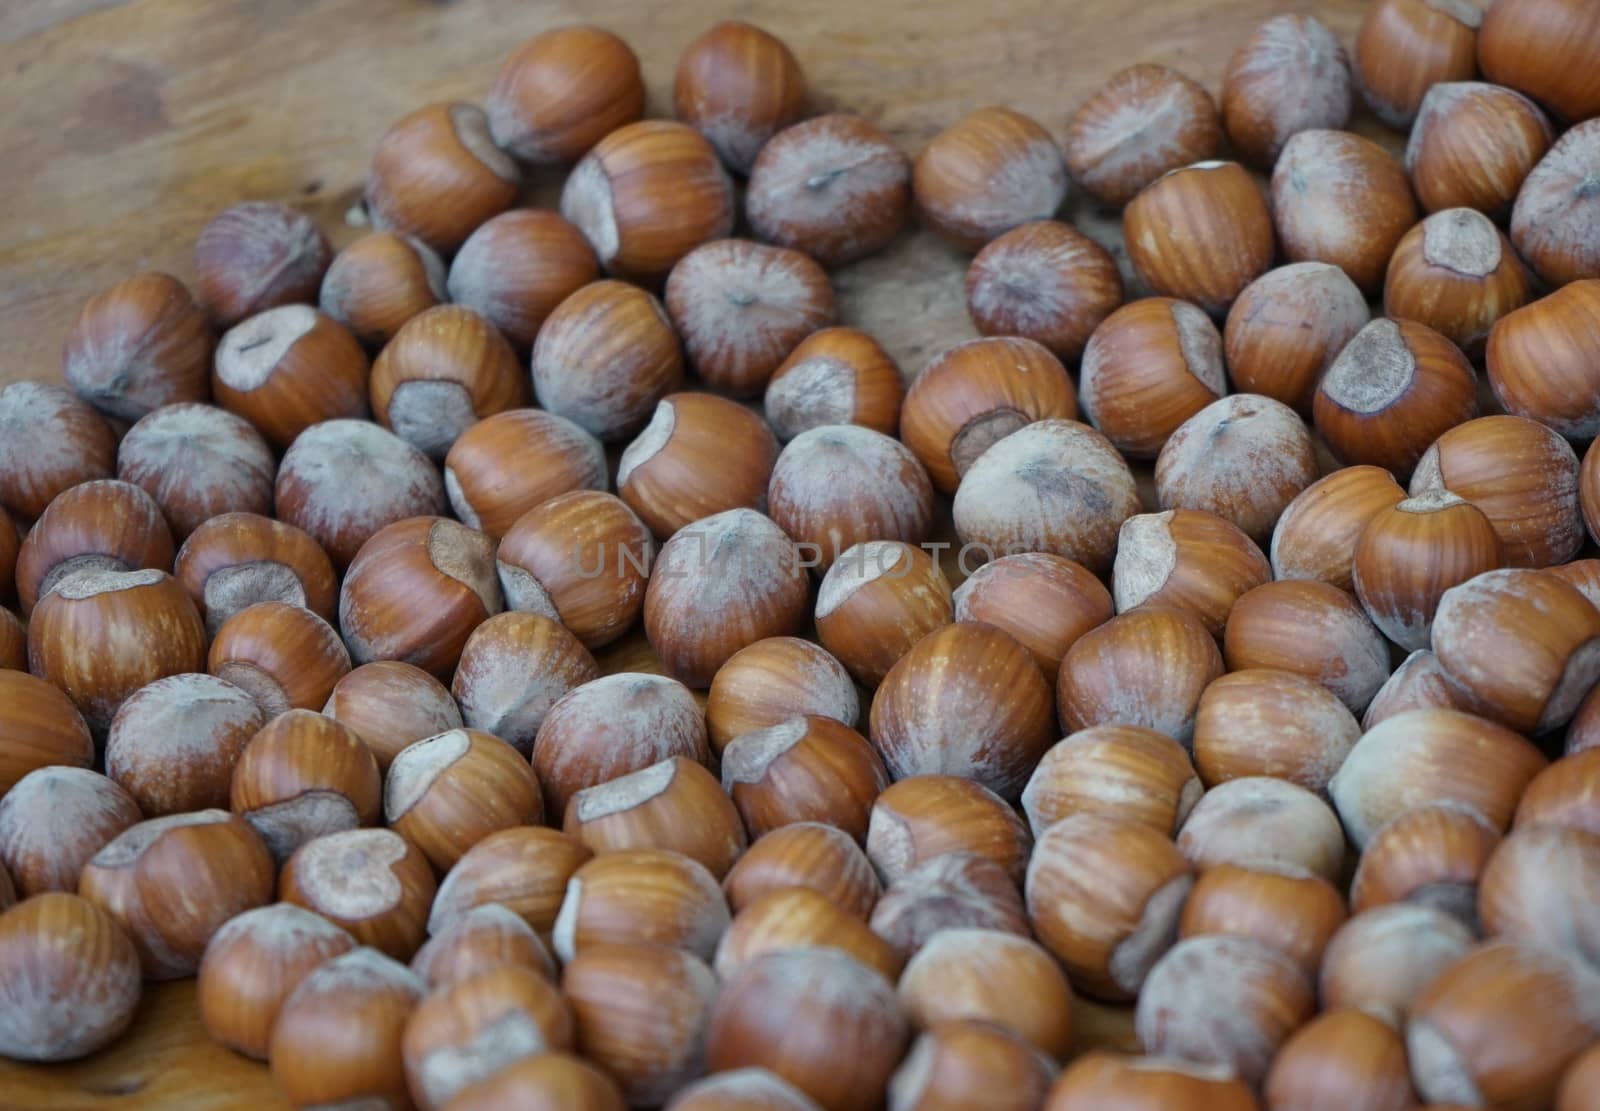 Langhe Hazelnuts, Piedmont - Italy